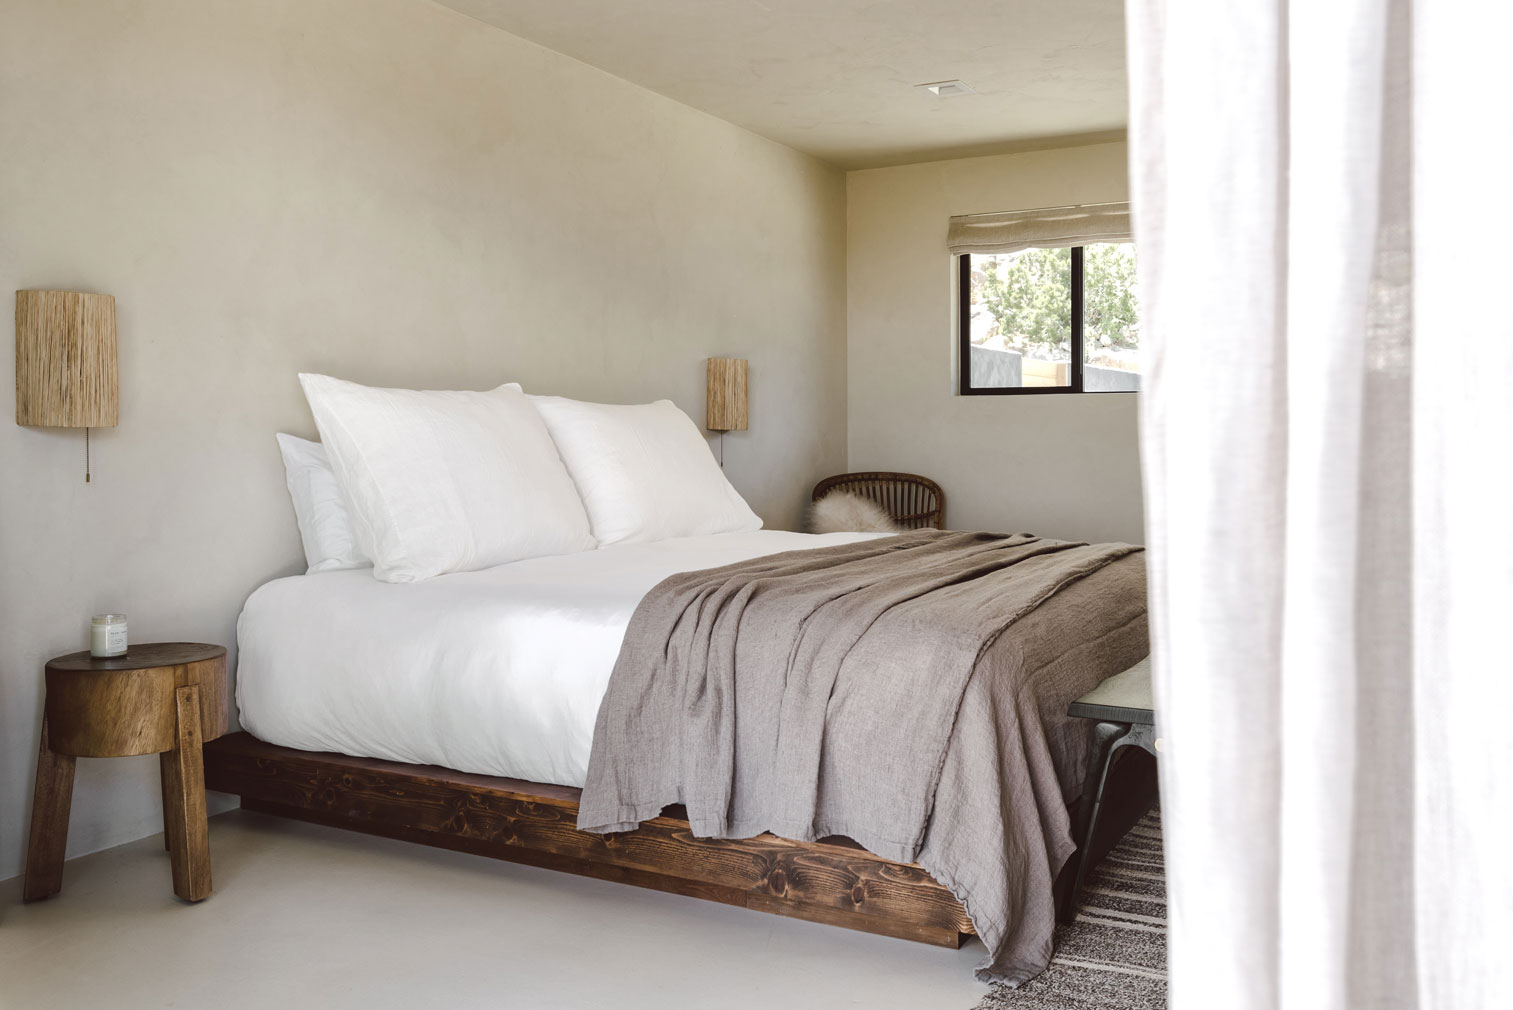 Villa Kuro is a minimalist hideaway in California's Joshua Tree National Park